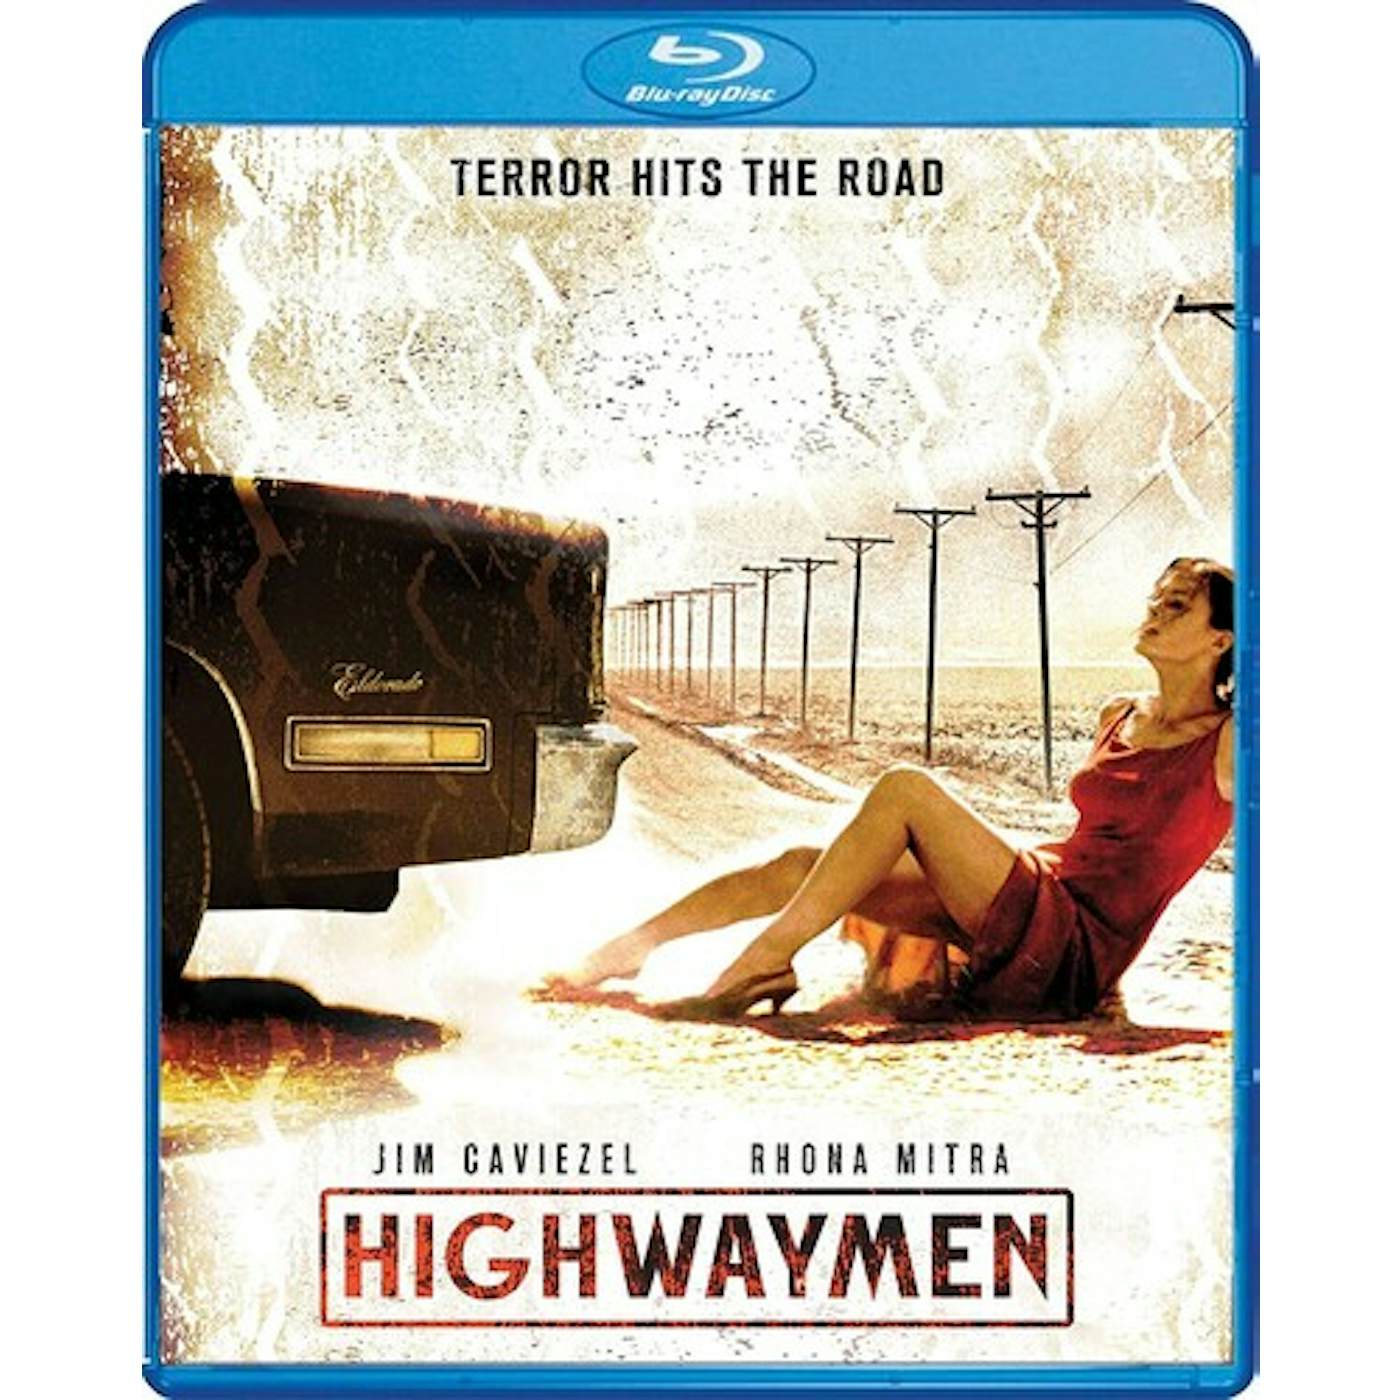 The Highwaymen (2004) Blu-ray